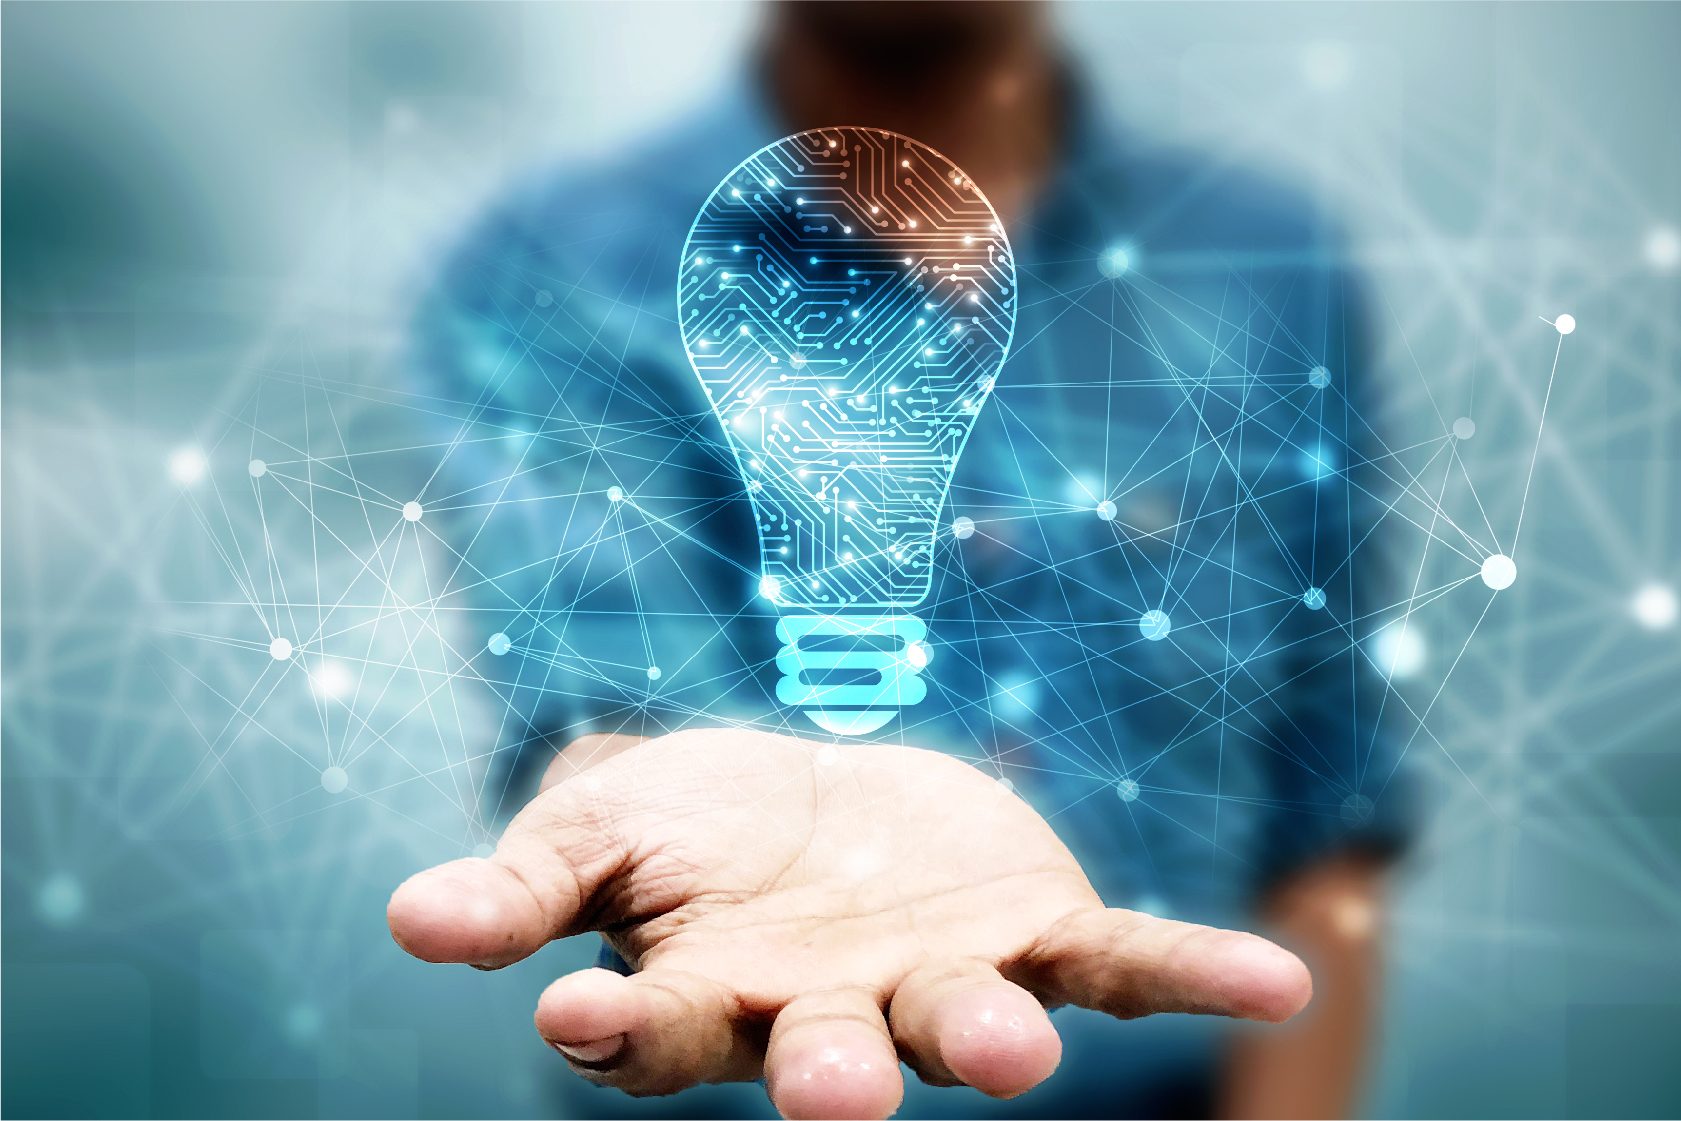 SAP BTP Is “Future-Proof Innovation” Says Zoosh